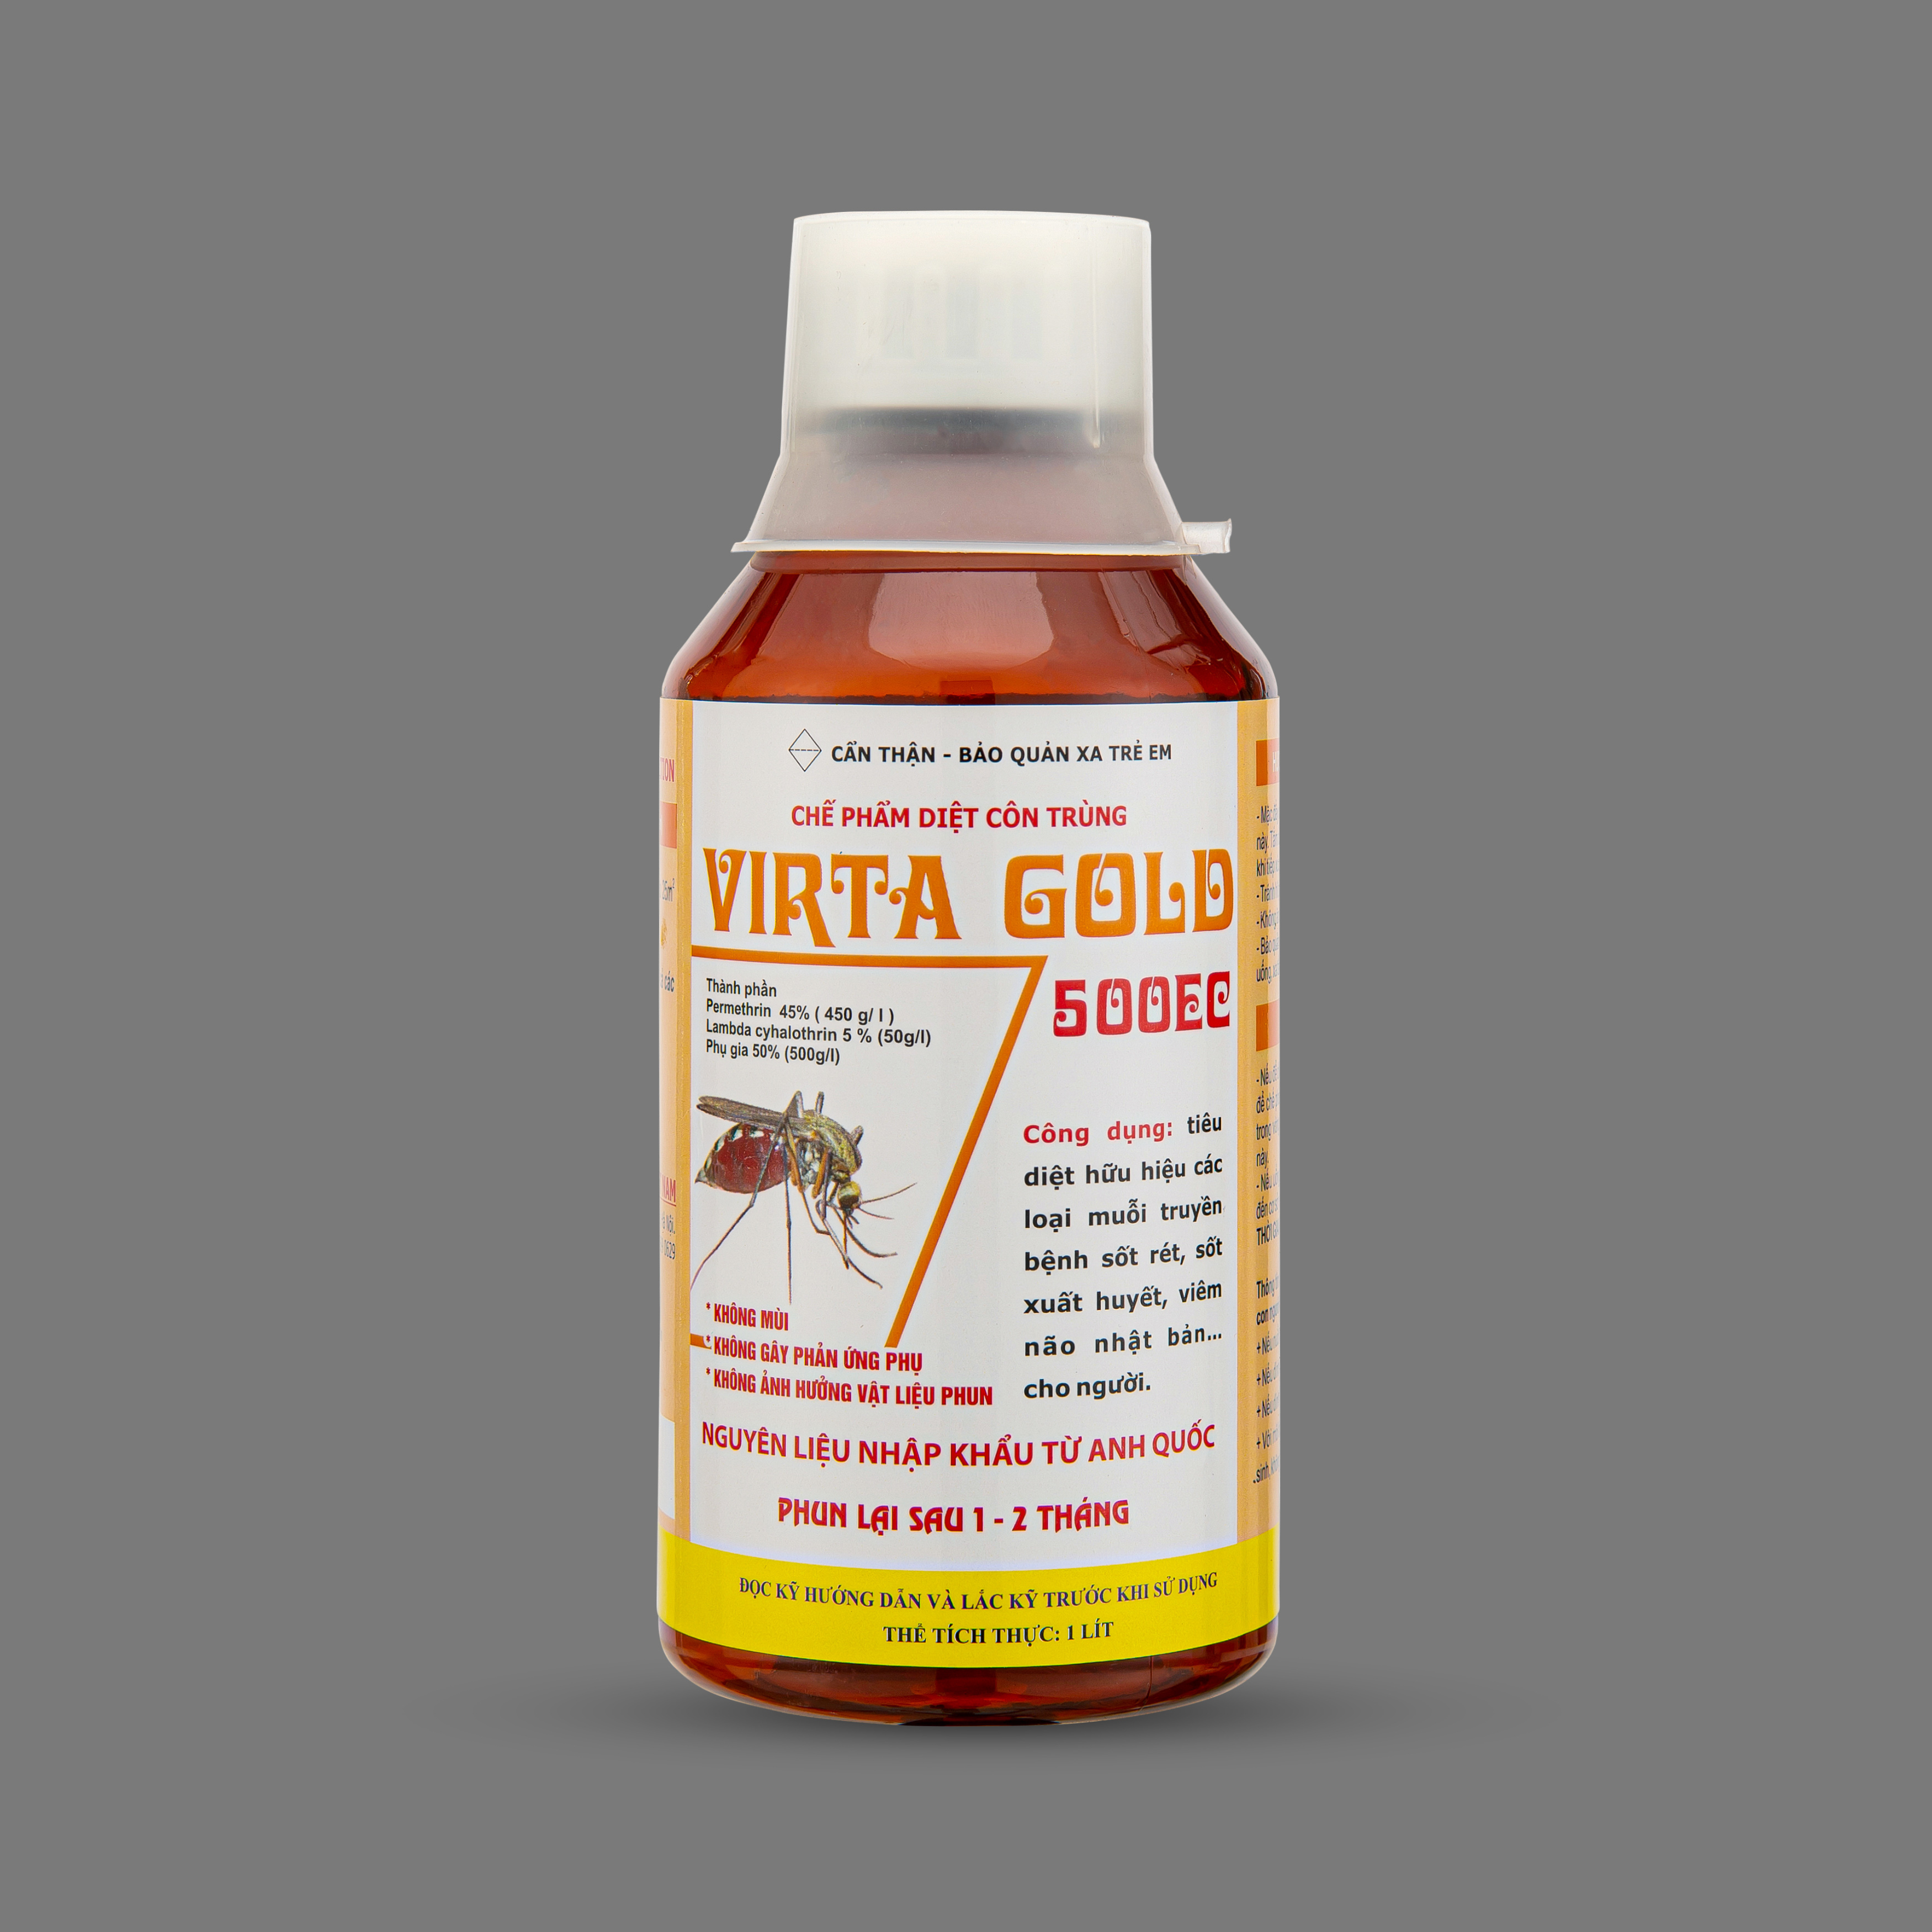 Virta gold 500ec 1l